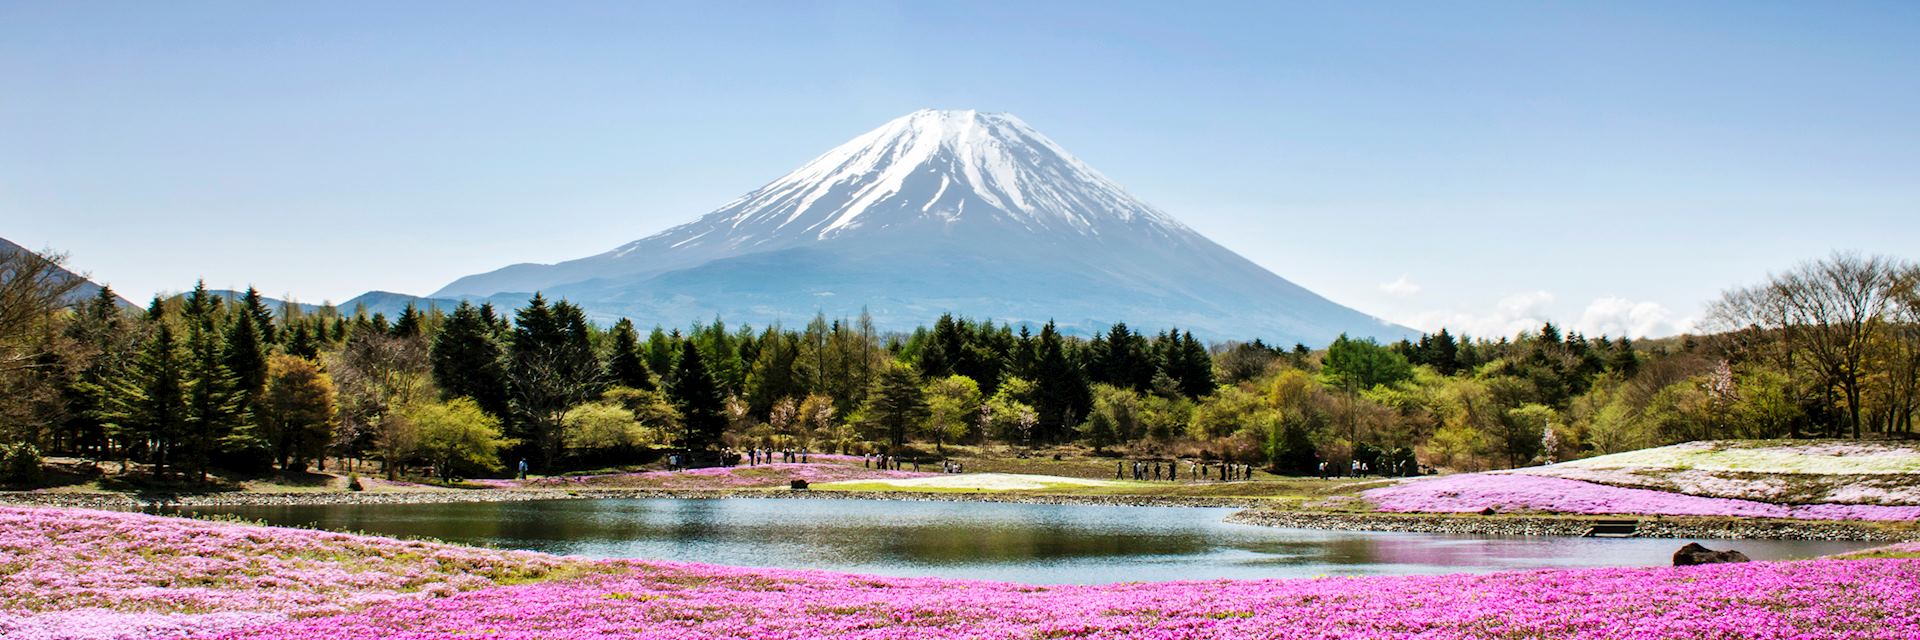 Plan Your Trip To Mount Fuji, Japan | Audley Travel